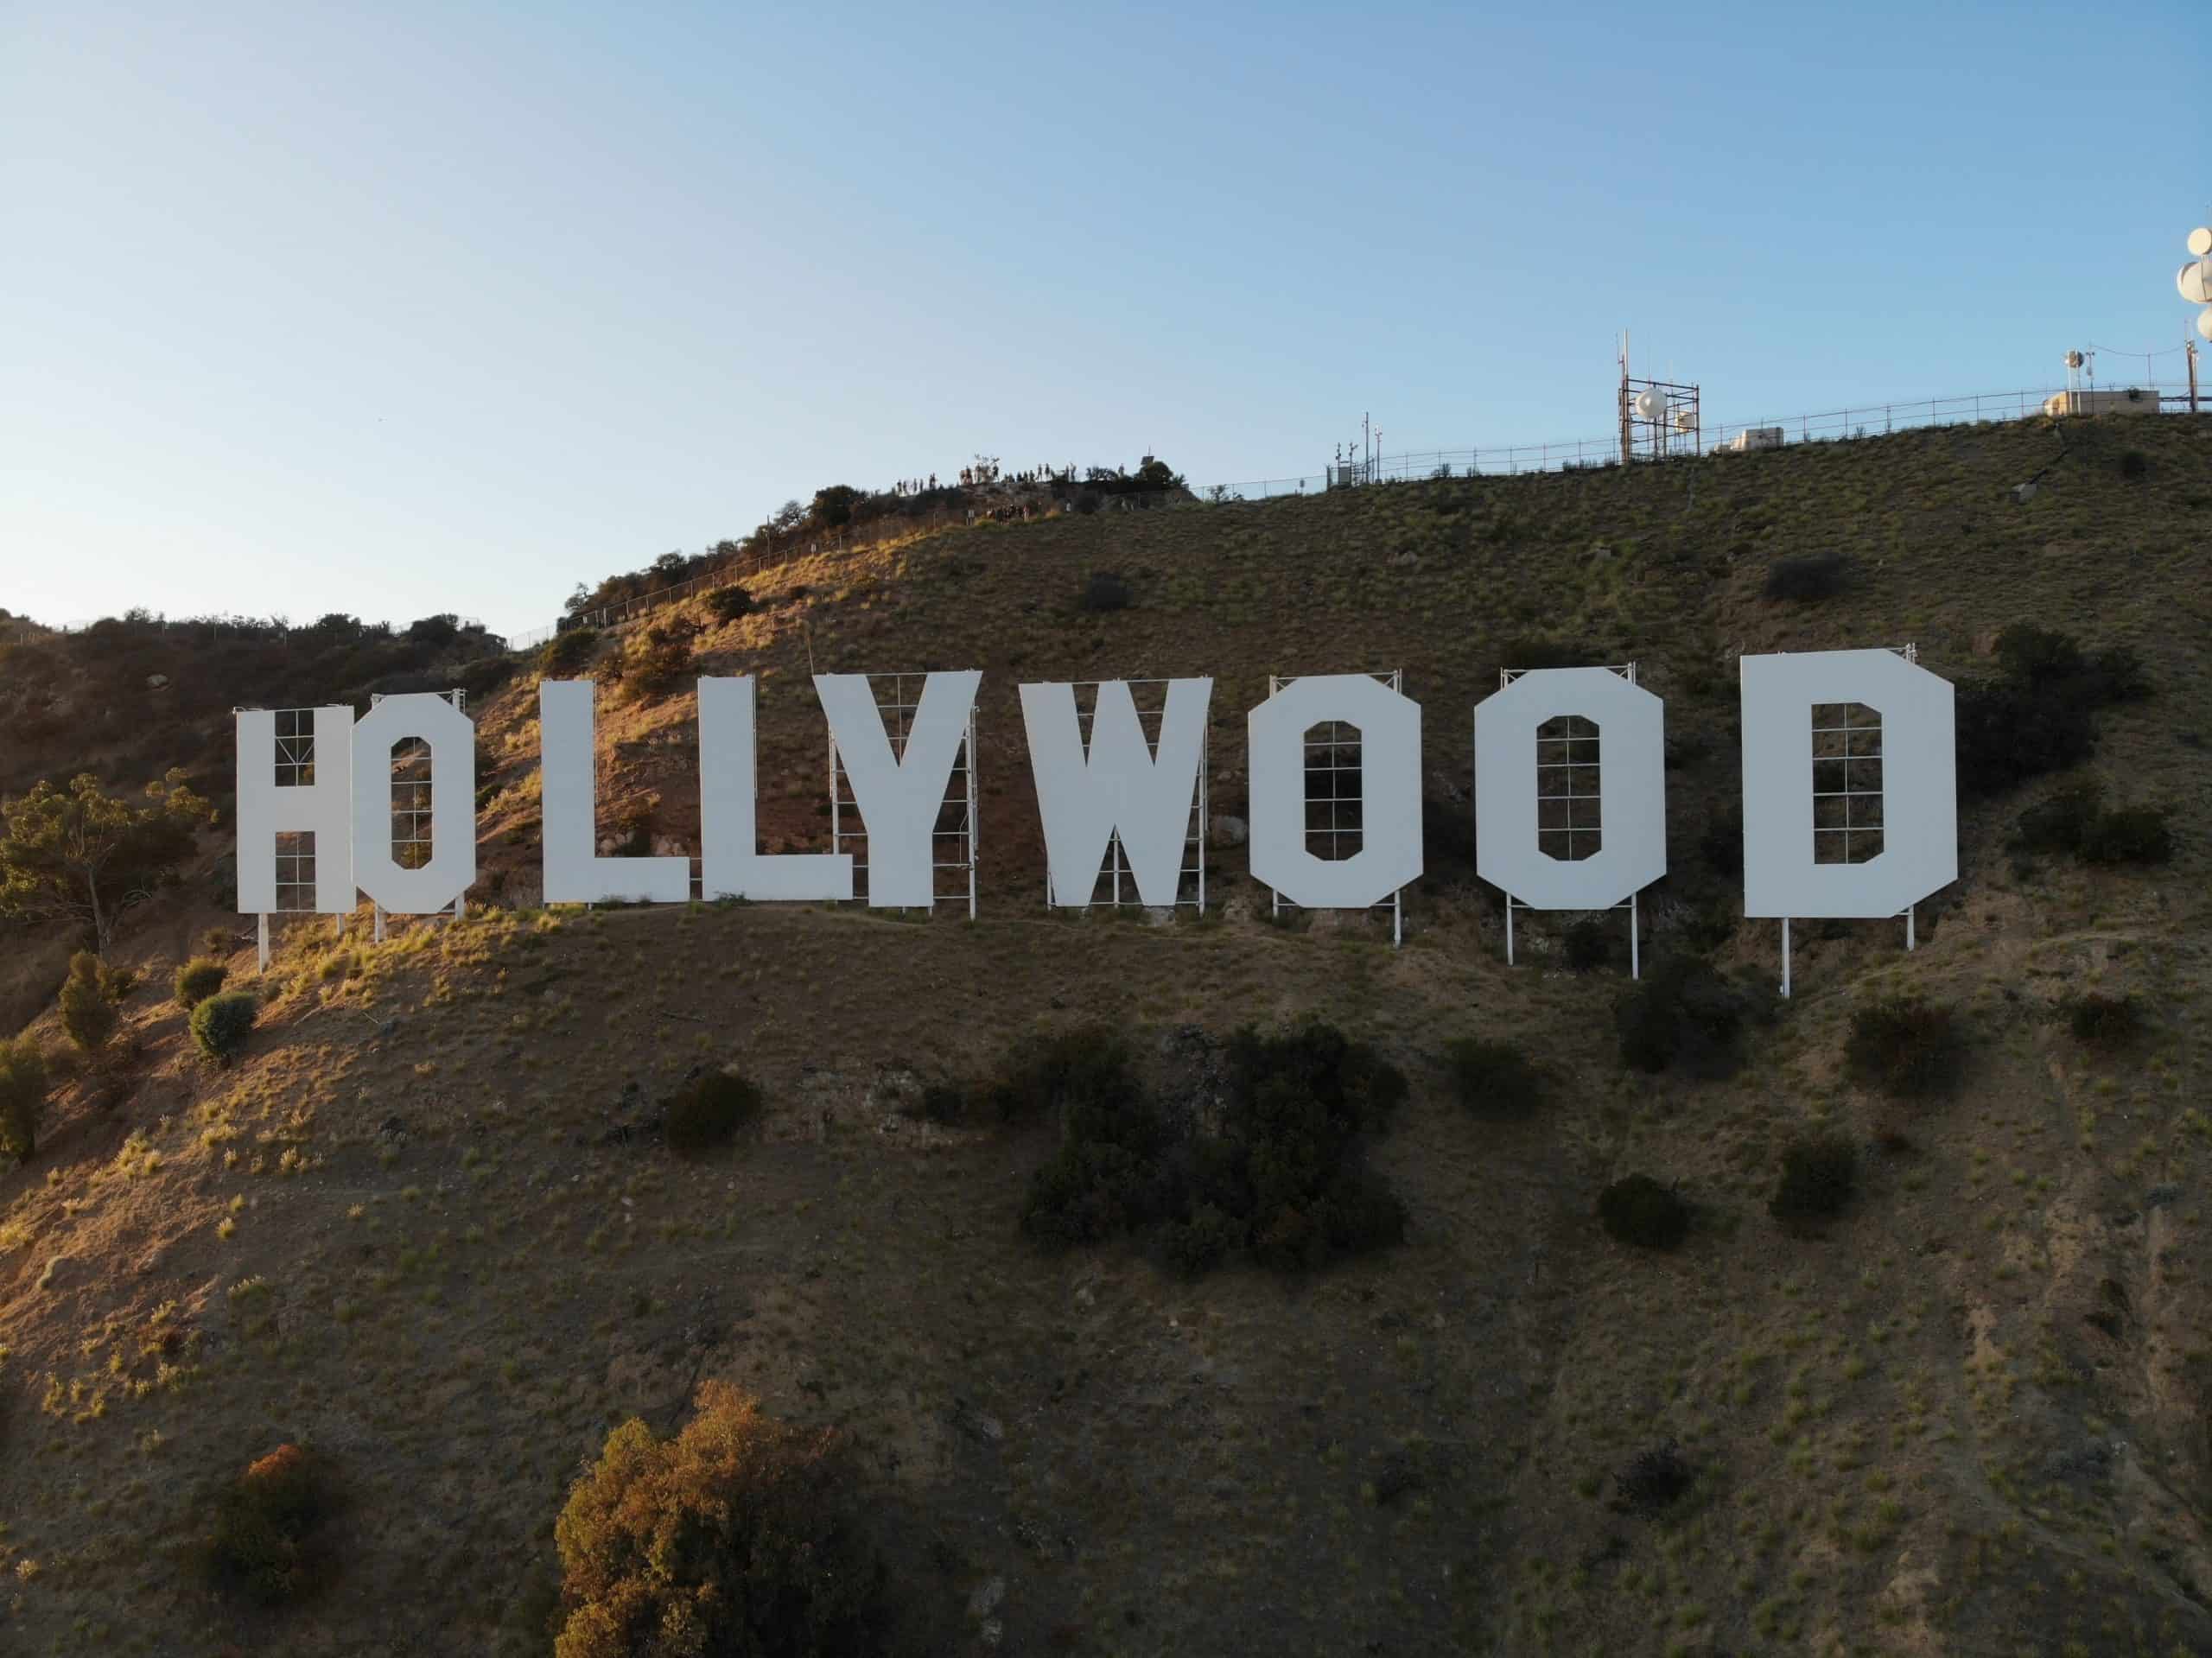 Hollywood film studio tips for aspiring filmmakers